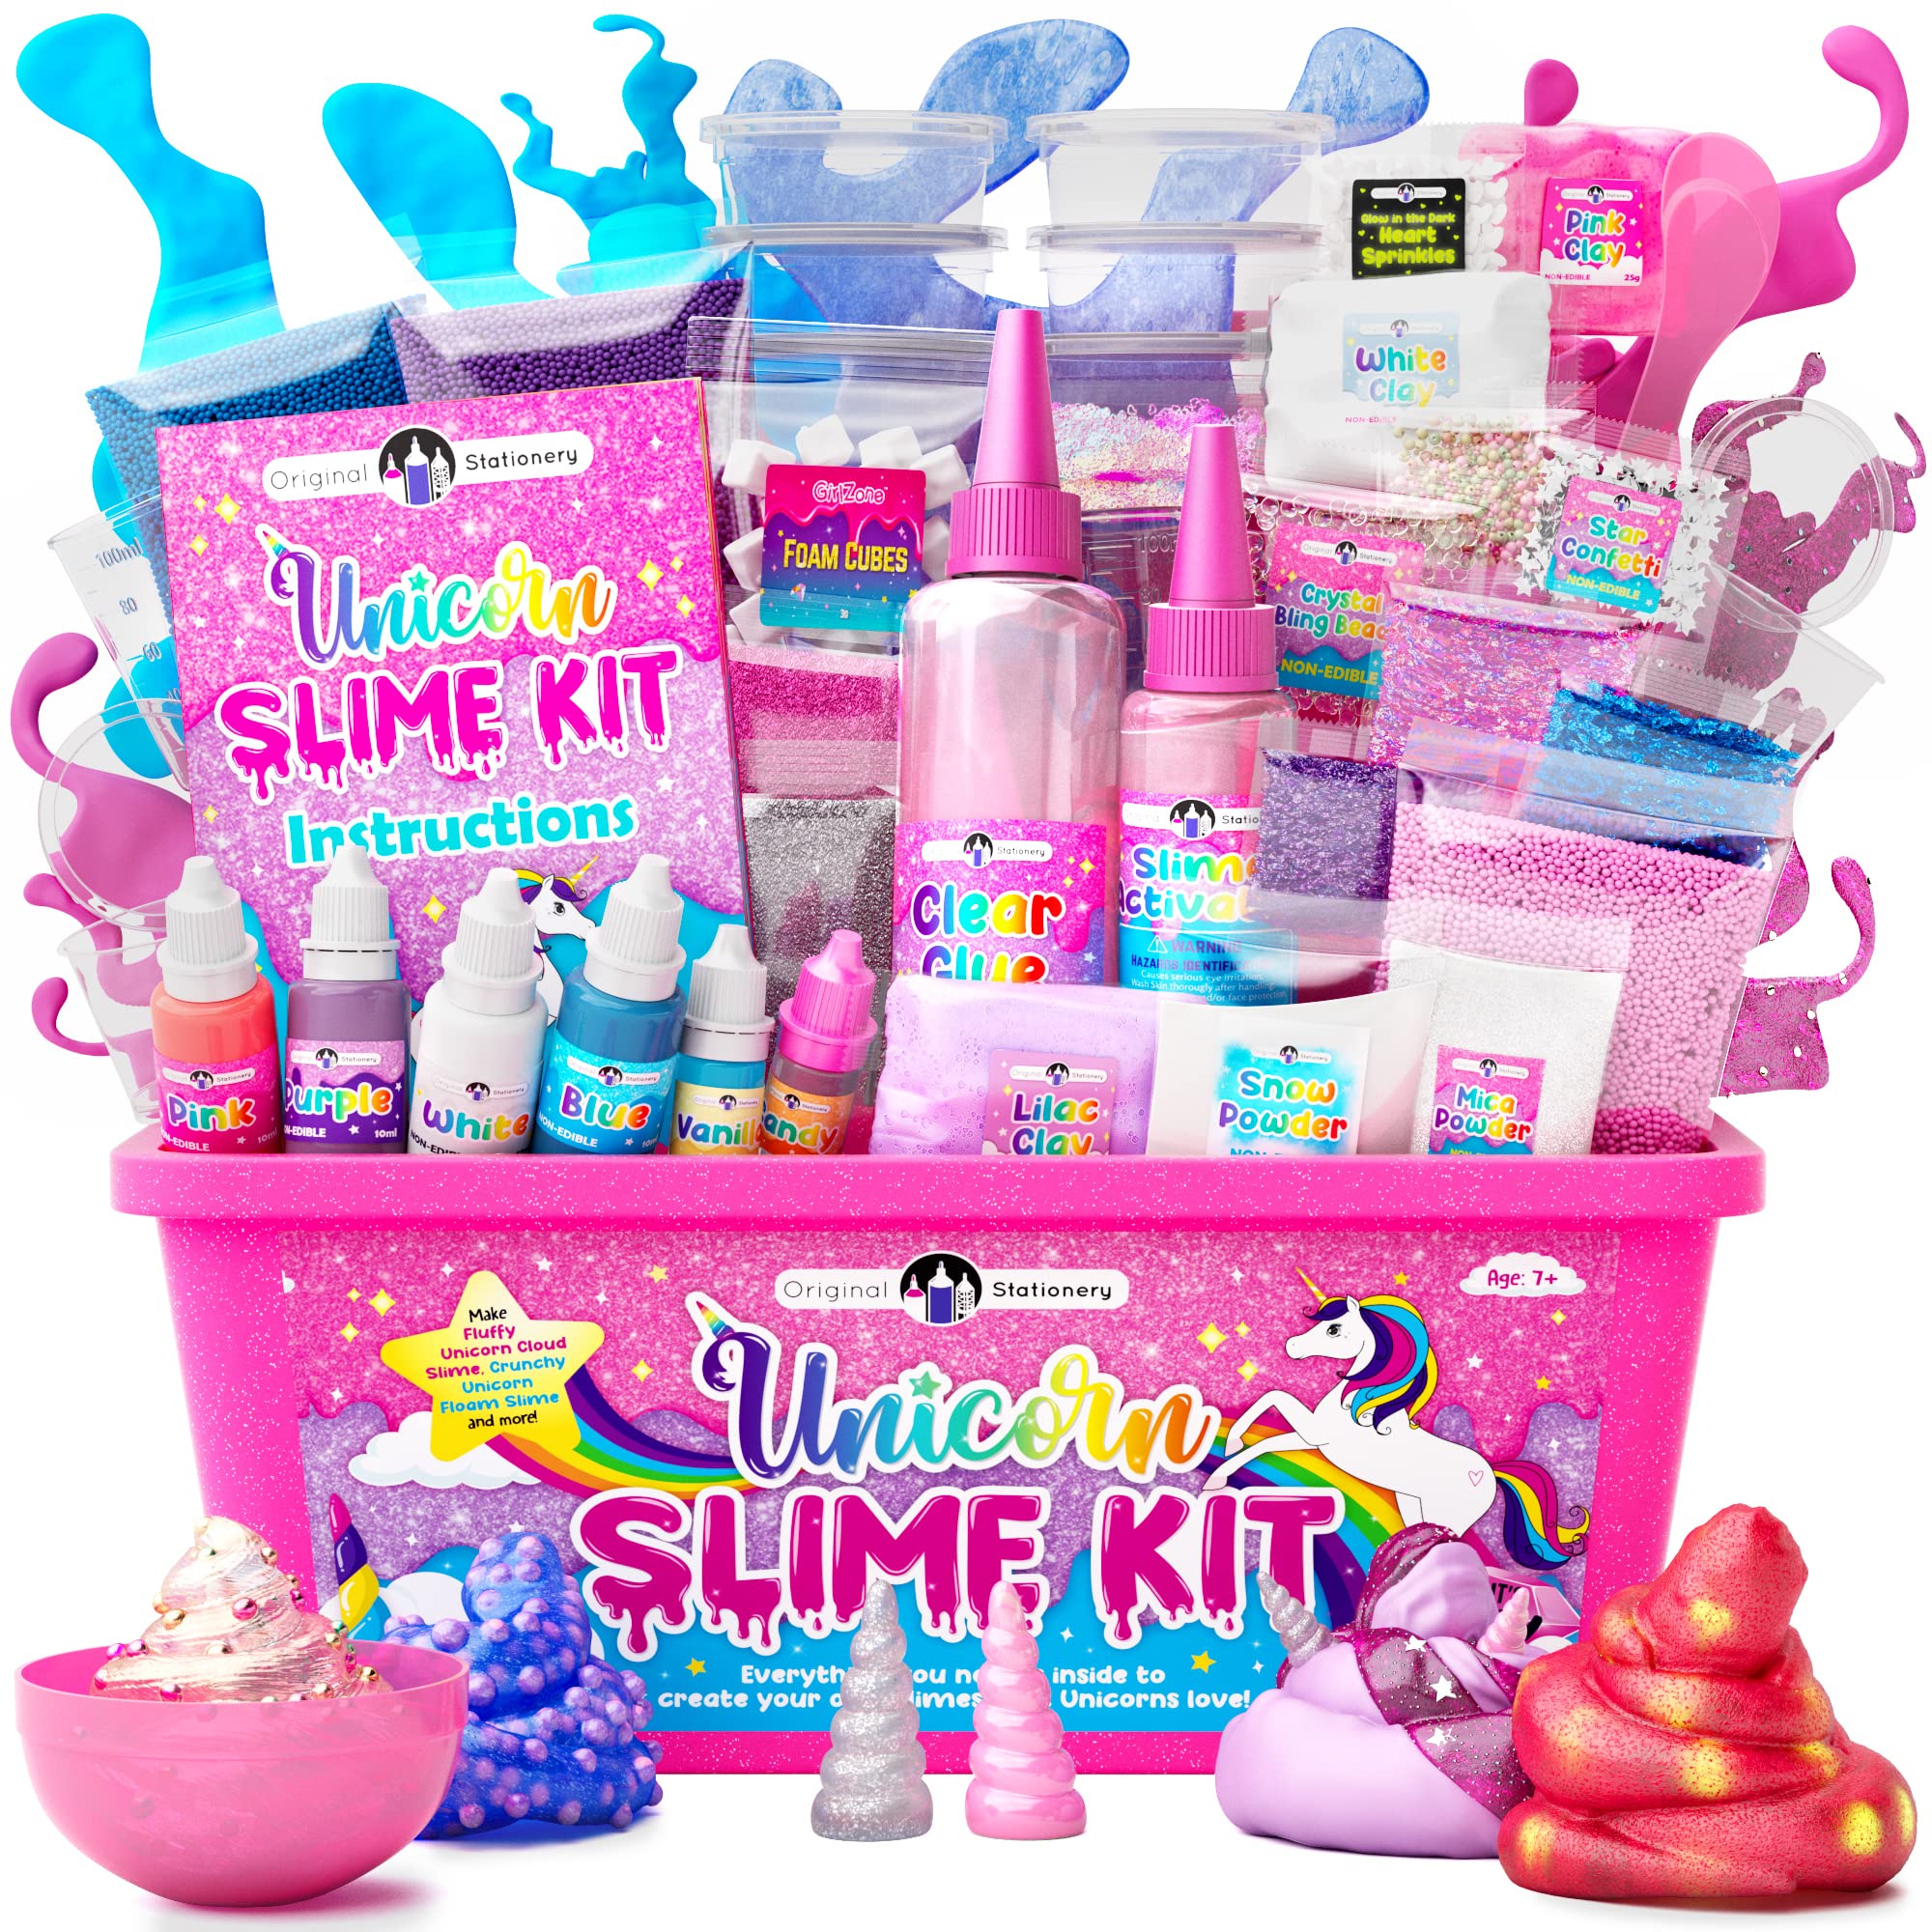 Original Stationery Unicorn Magical Slime Kit for Girls 10-12 to Make